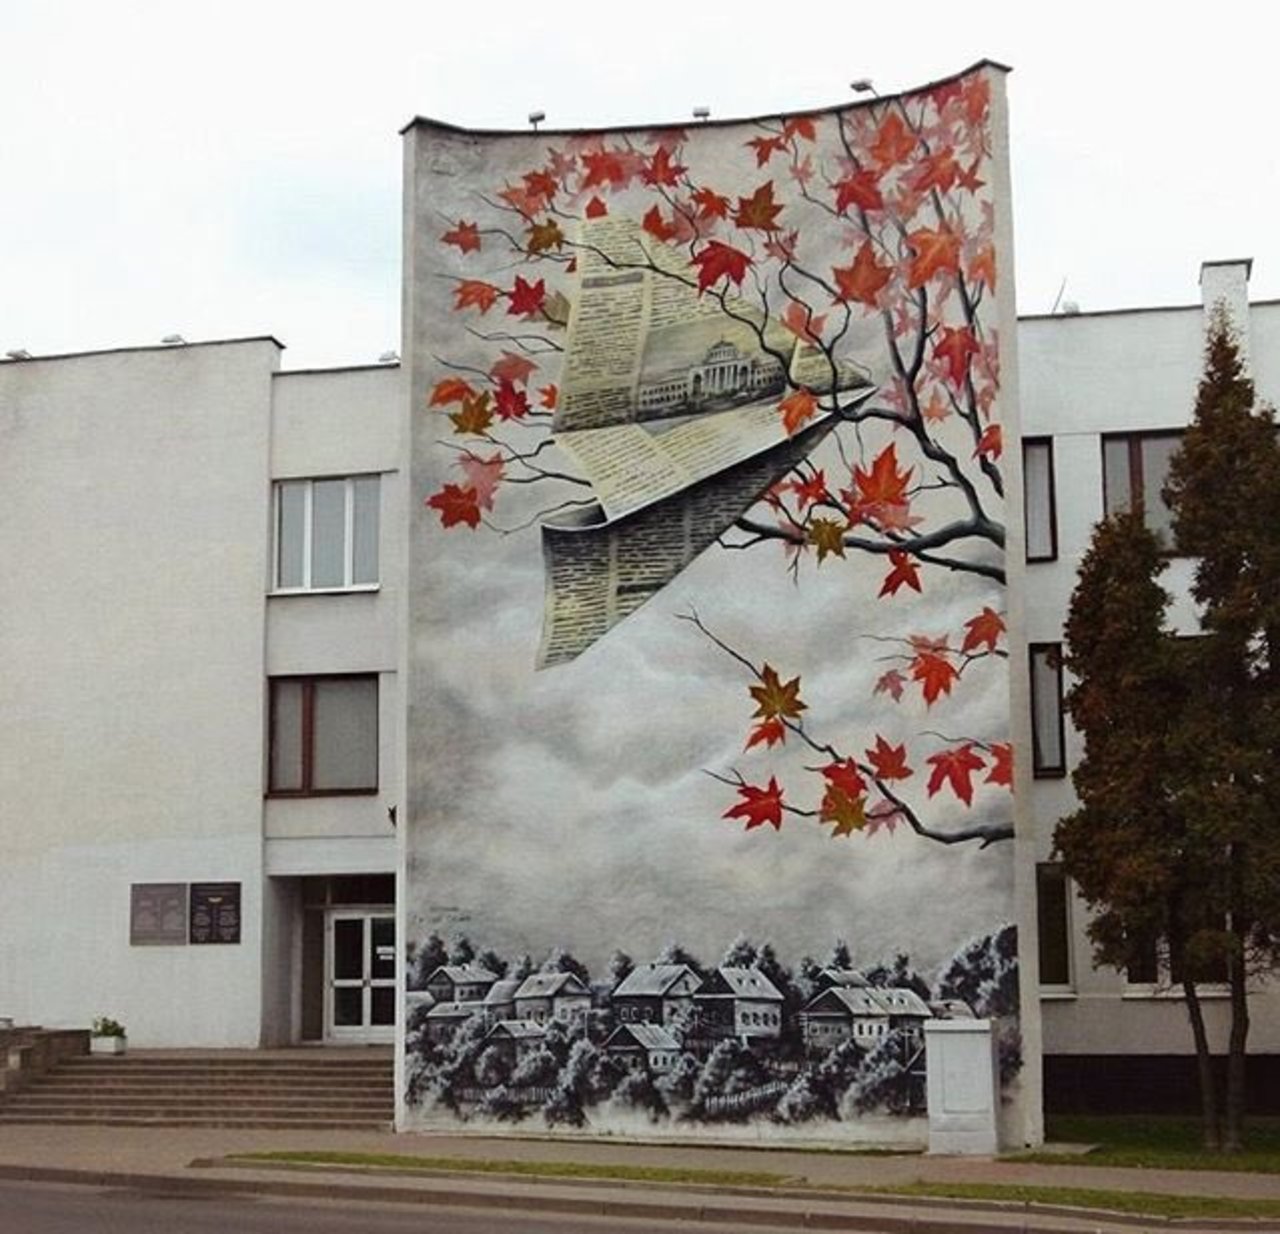 New Street Art by MUTUS in Belarus 

#art #graffiti #mural #streetart https://t.co/uKzRwnS64b